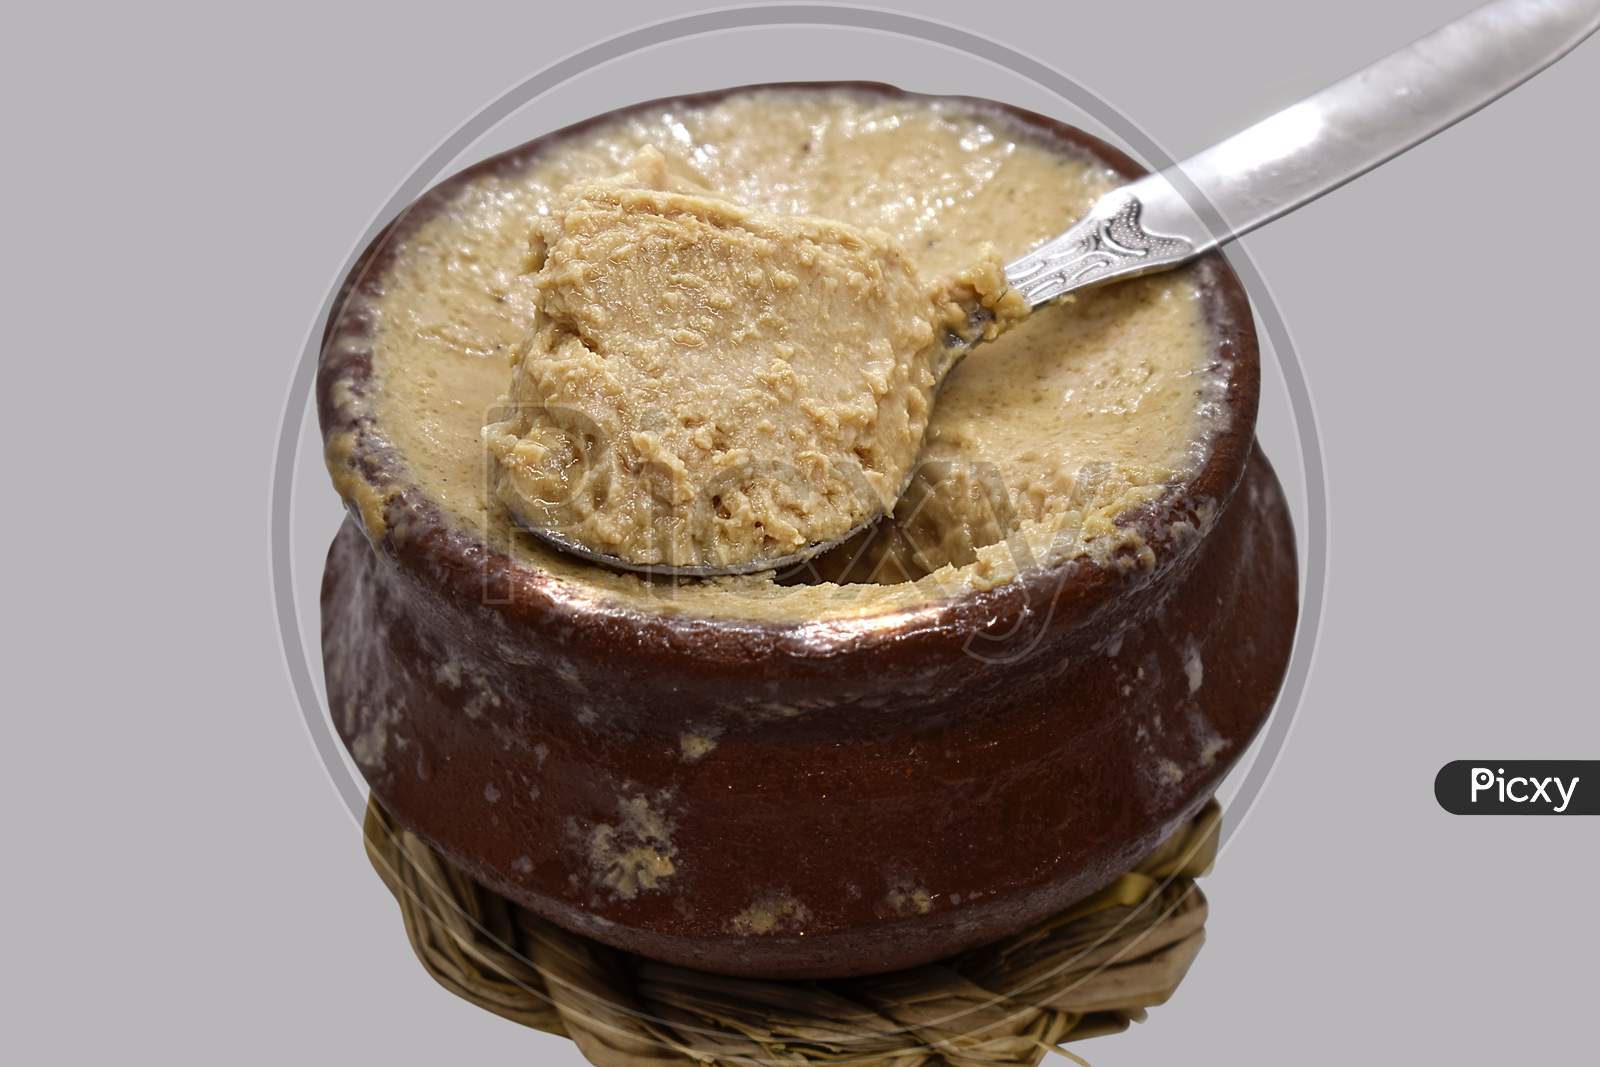 Mishti doi, yogurt,Meethi Dahi, is a fermented sweet doi originating from the Bengal region of the Indian